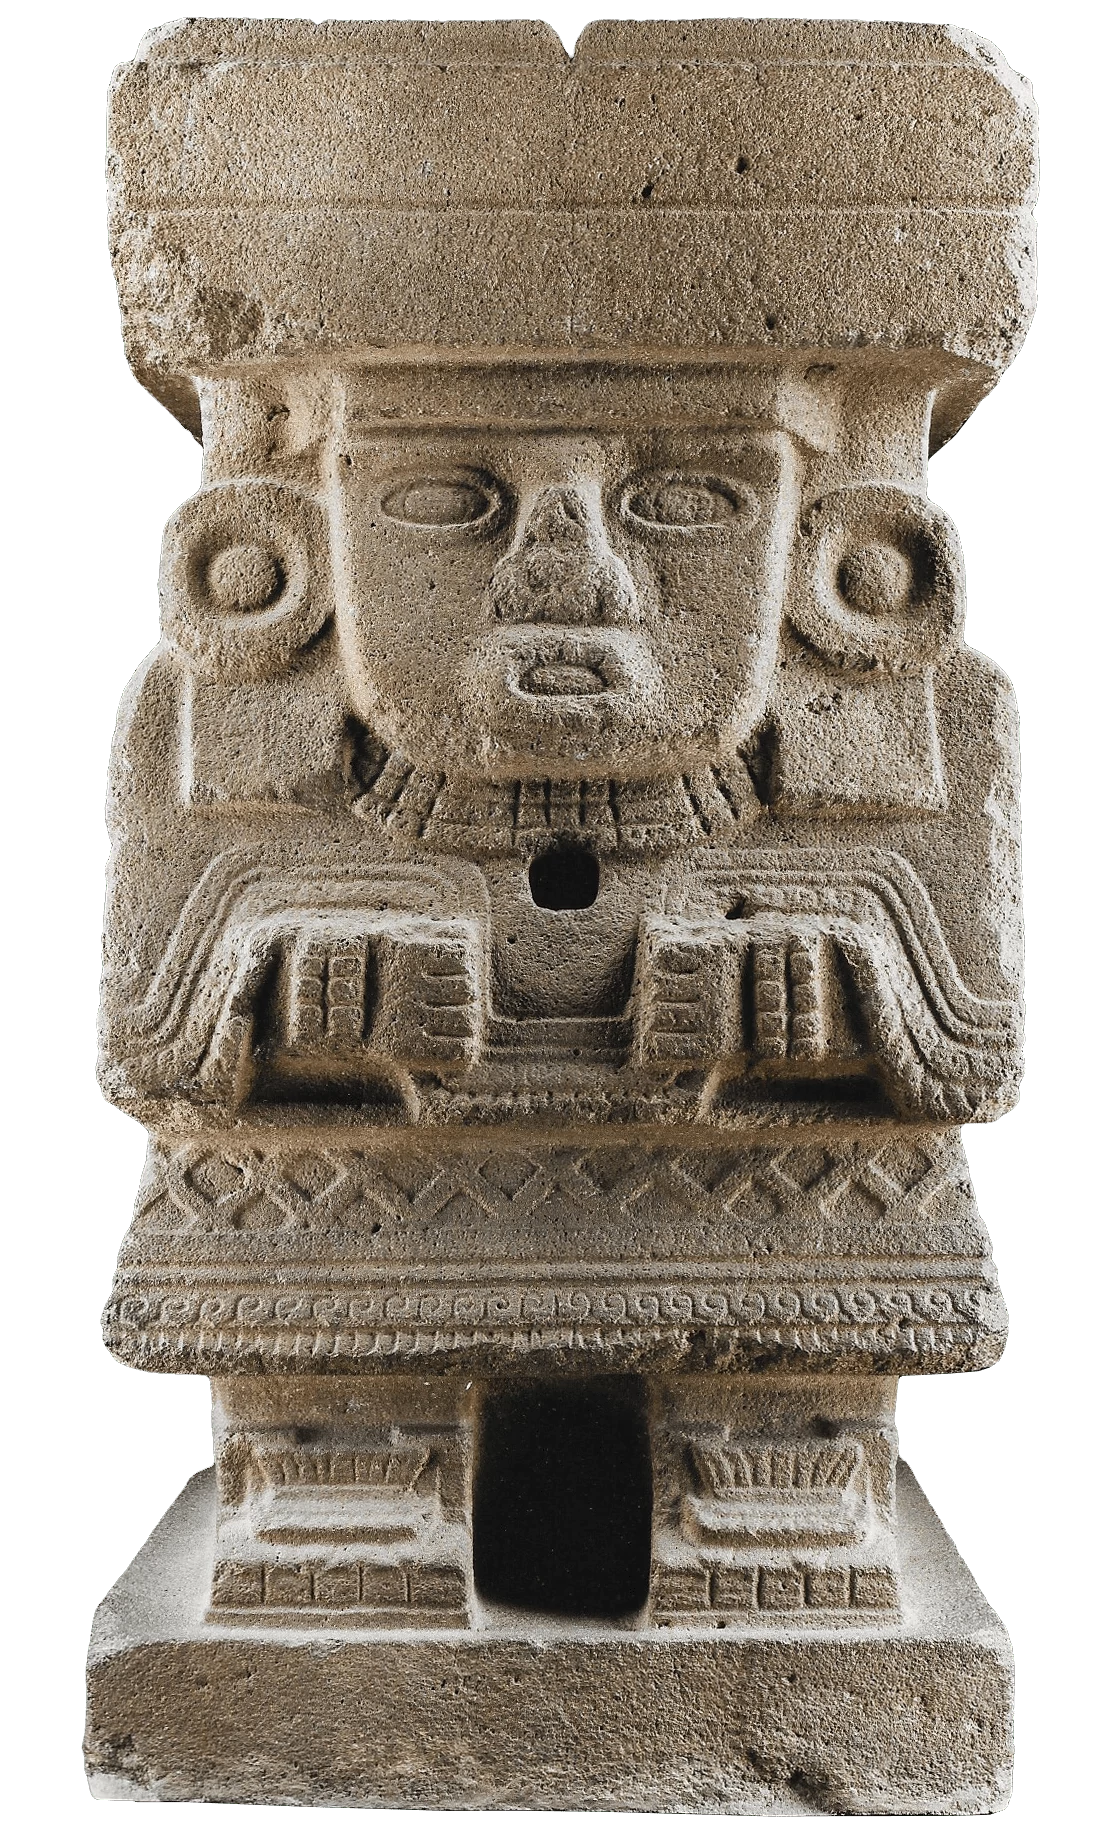 Chalchiuhtlicue Monolith, Teotihuacan Culture